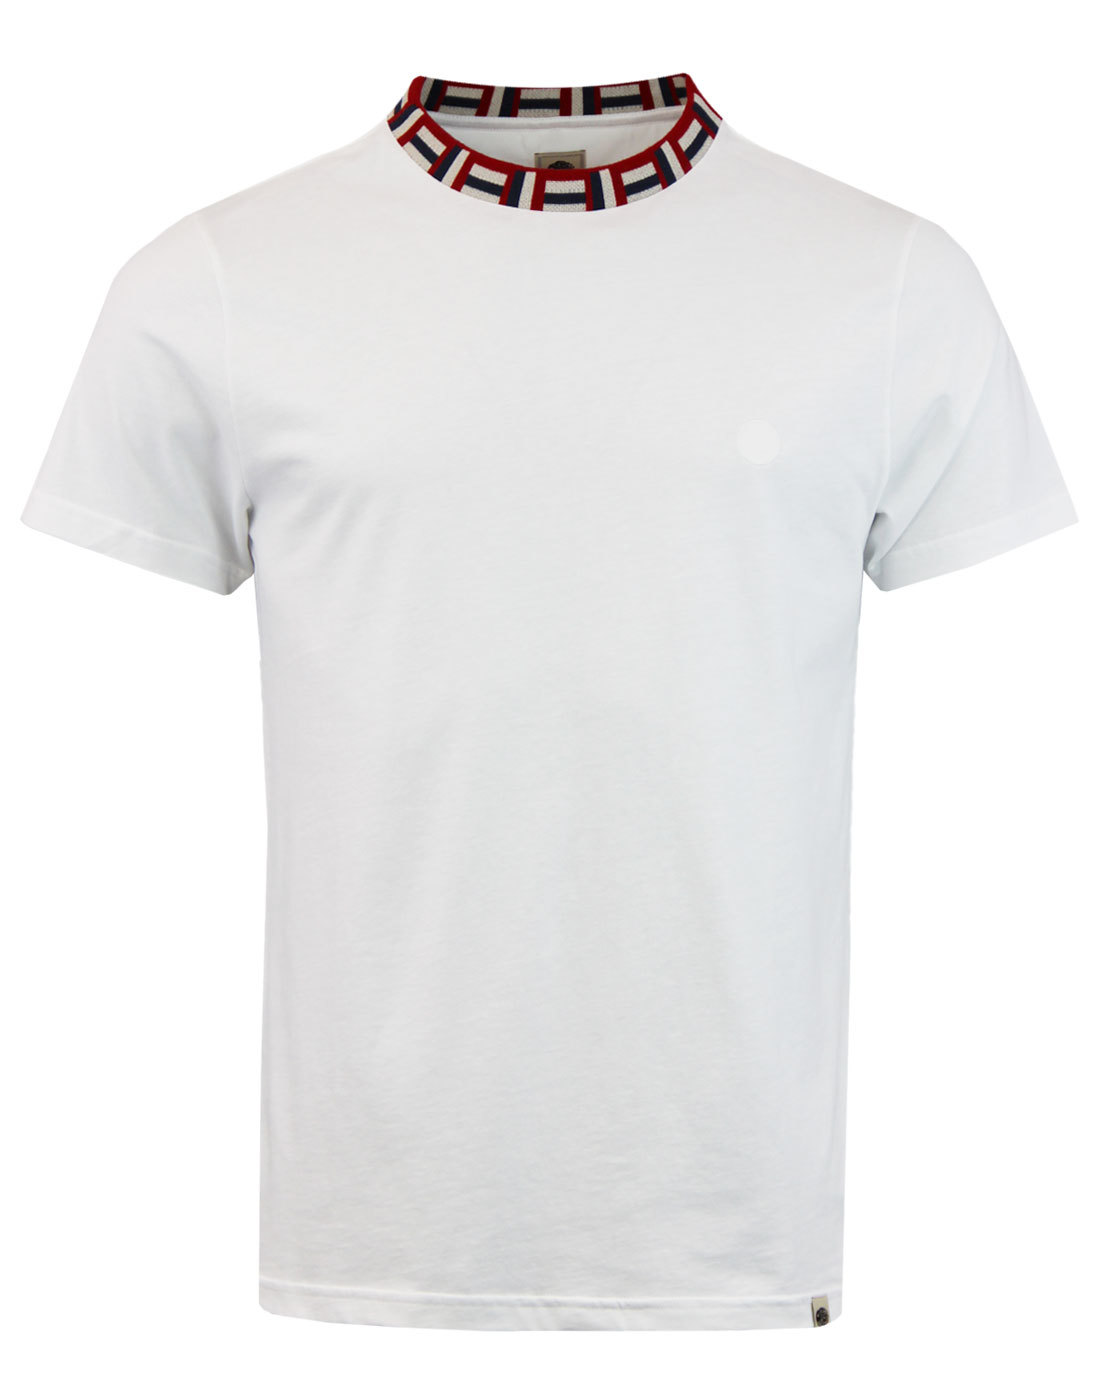 Plecteom PRETTY GREEN Mens Retro 60s Mod Rib Neck T-shirt White